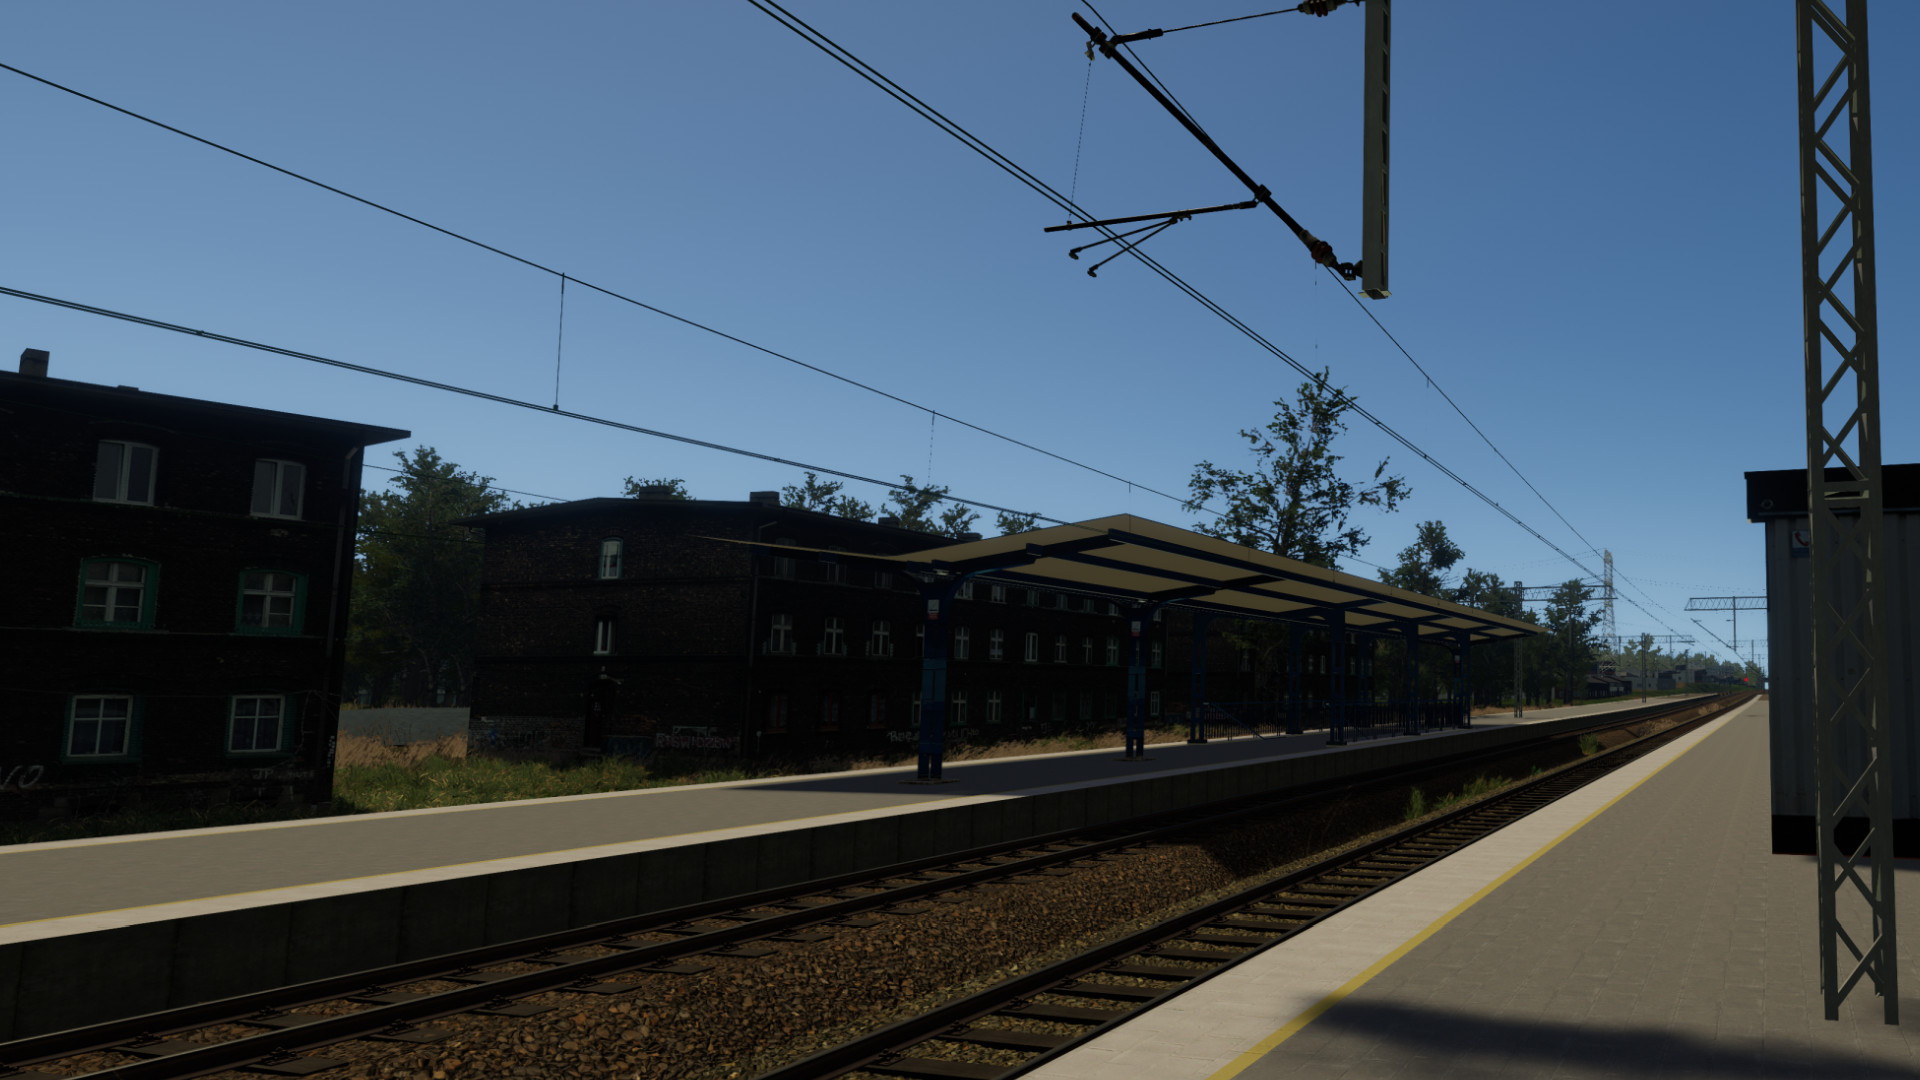 SimRail - The Railway Simulator - screenshot 10